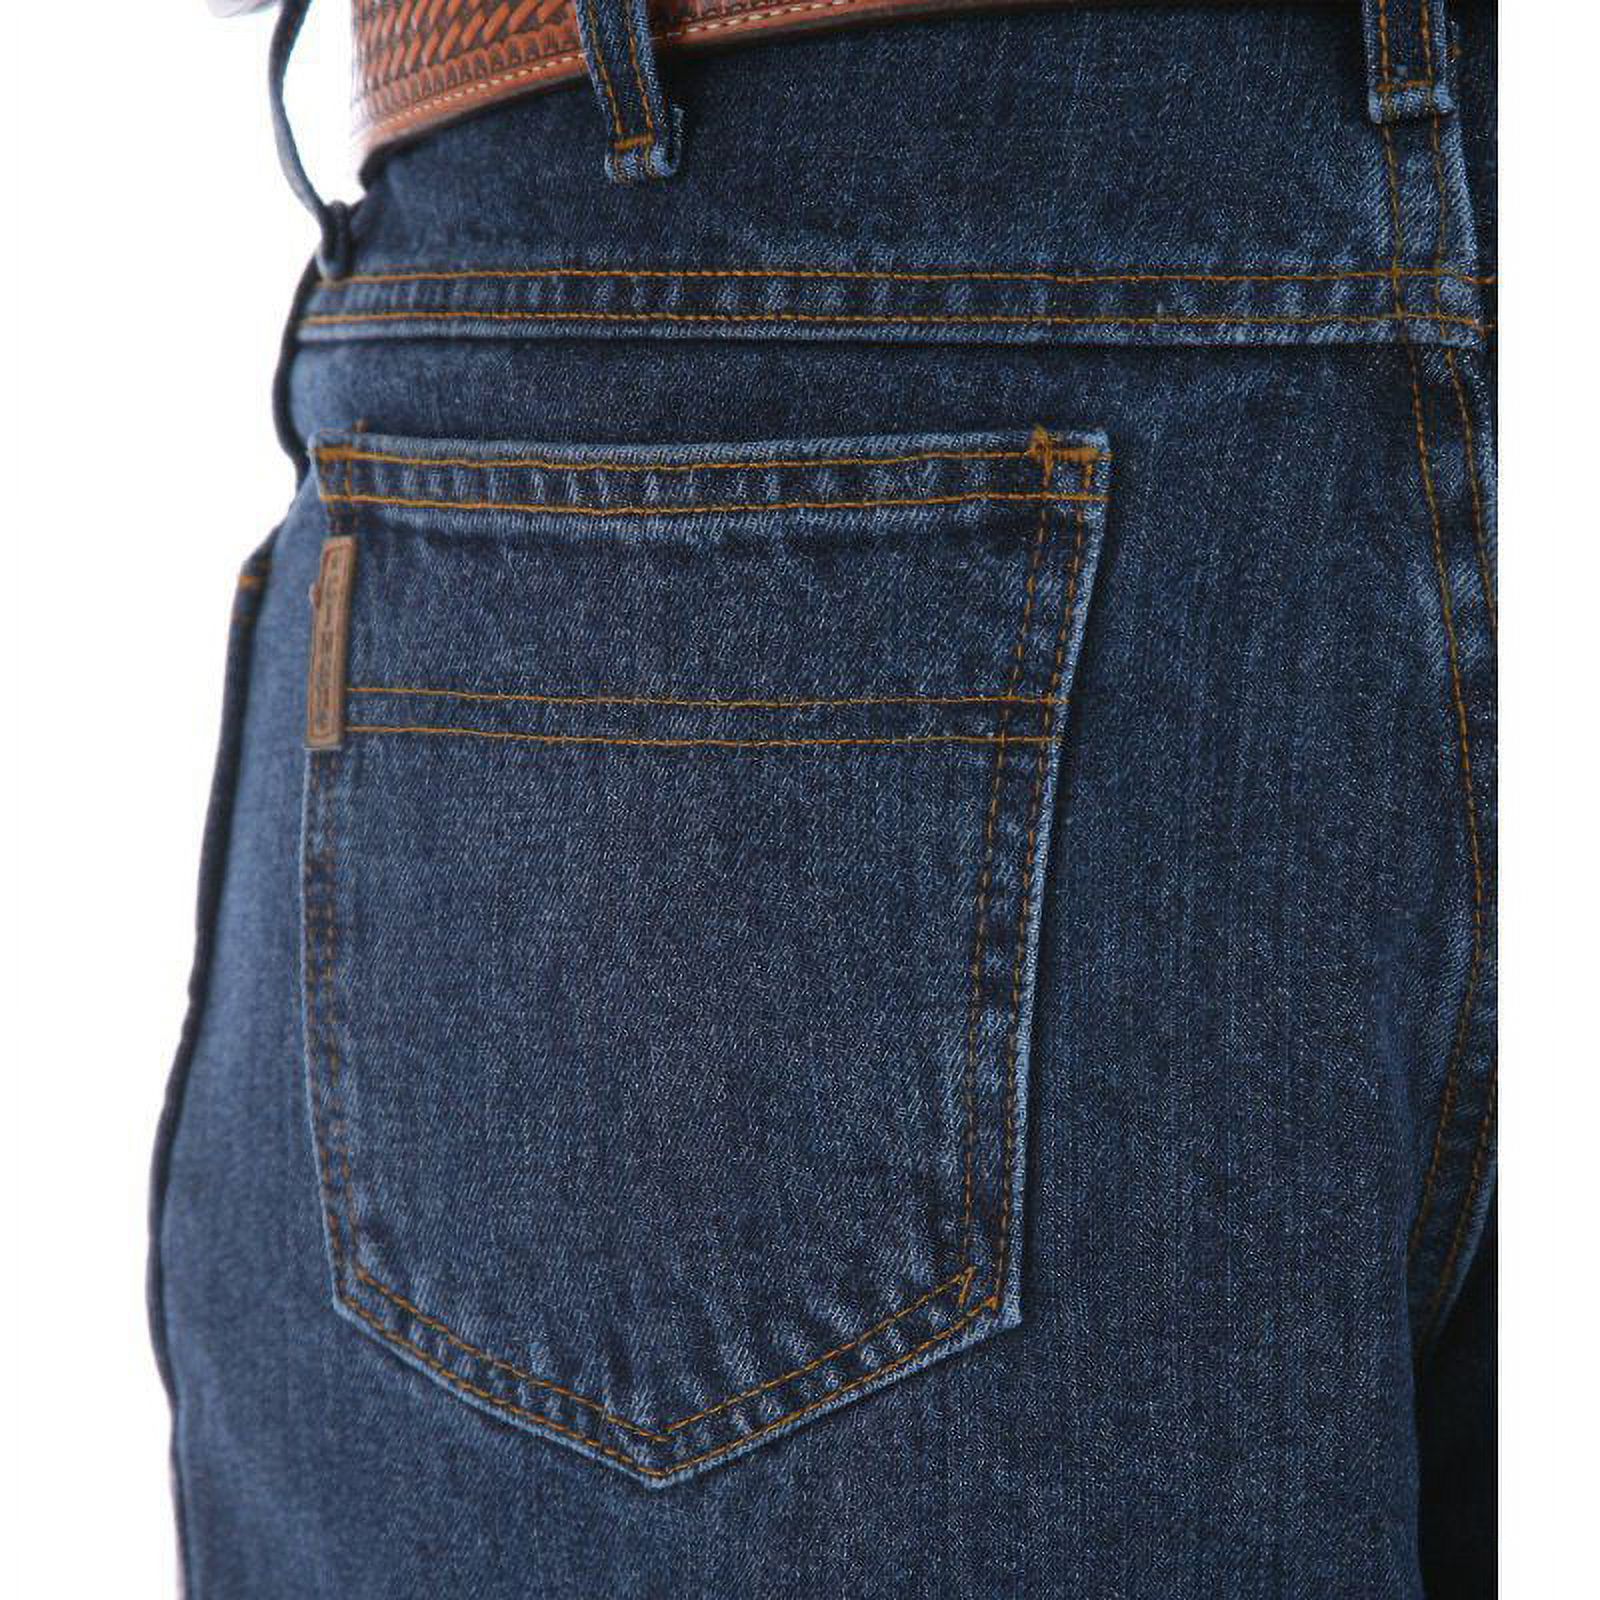 Cinch Apparel Mens Green Label Original Fit Jeans 35x30 Dark Stonewash - image 3 of 4